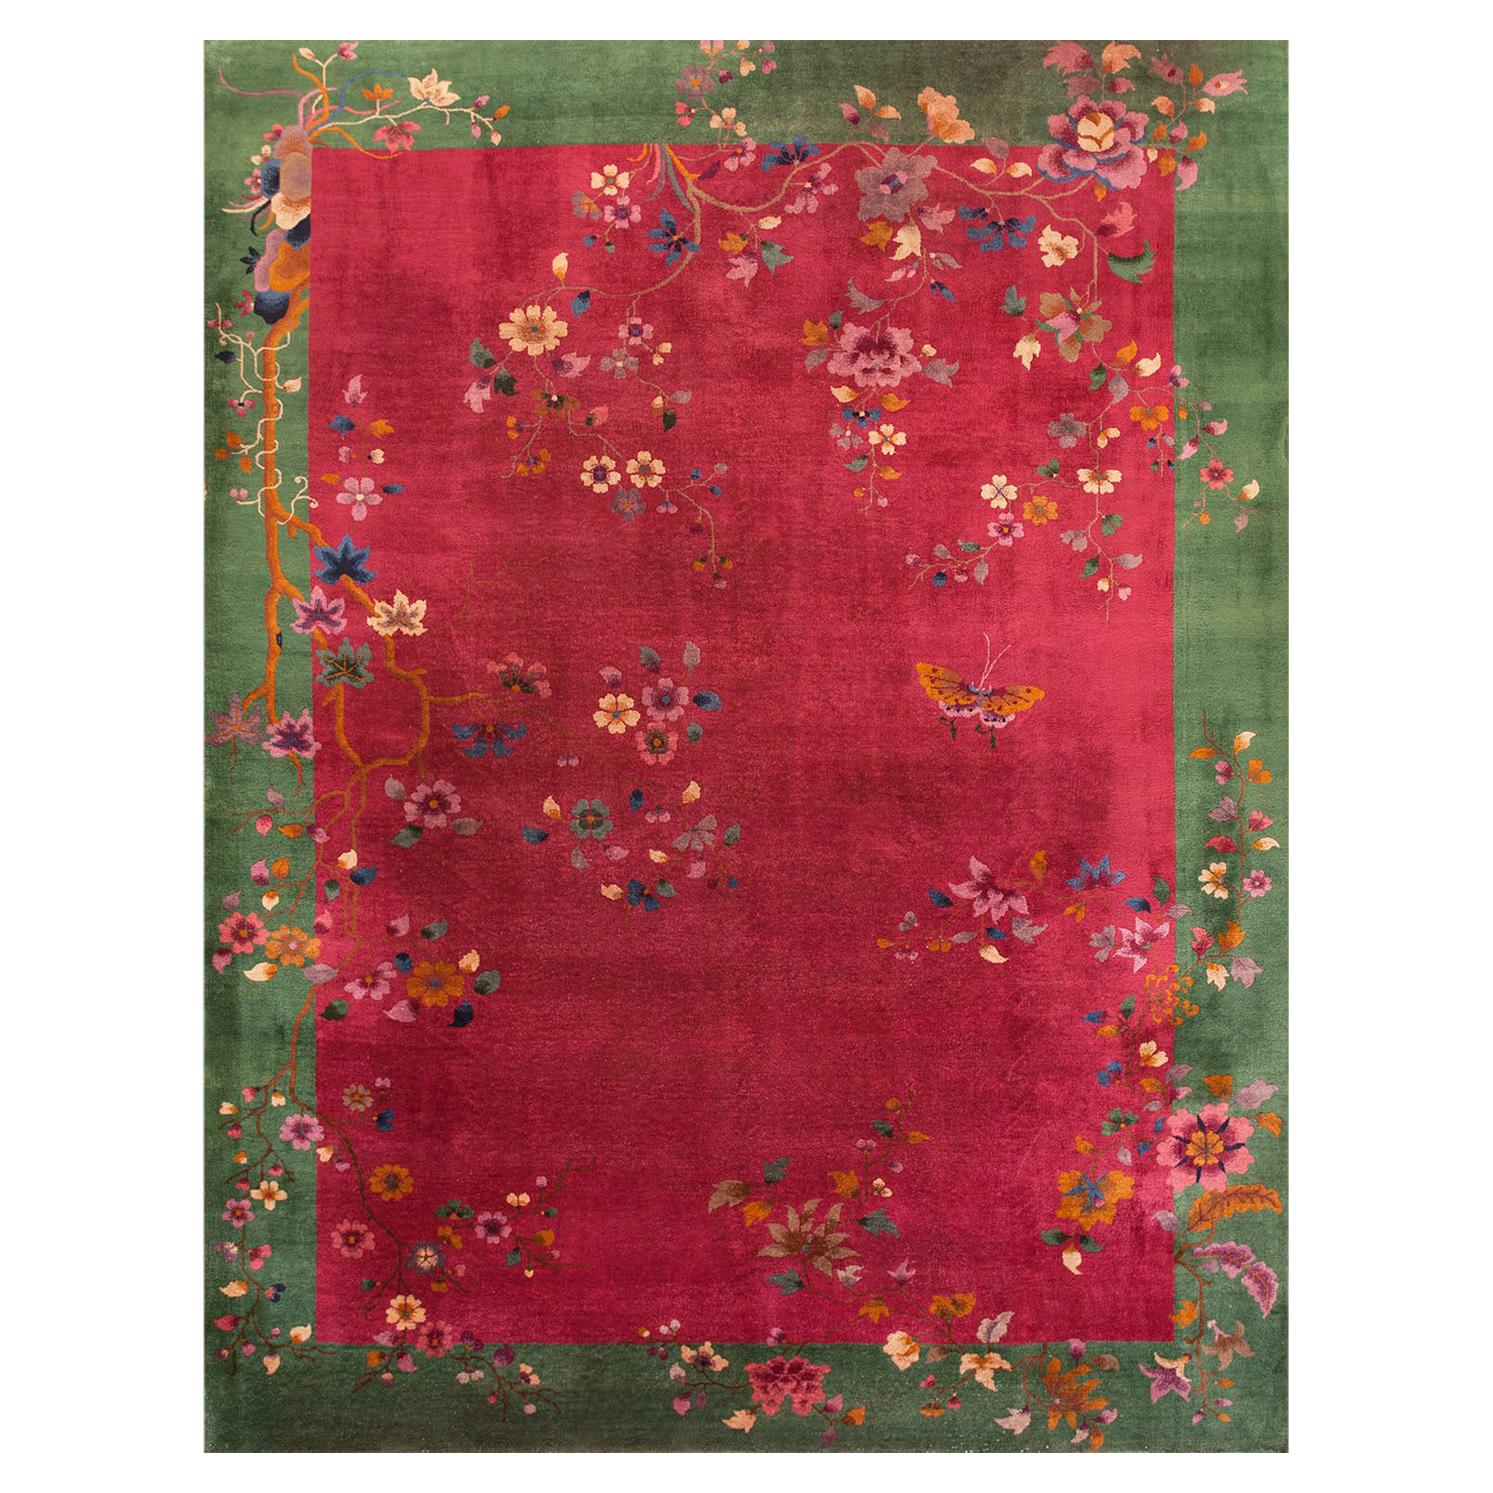 1920s Chinese Art Deco Carpet ( 9' x 11'8" - 275 x 355 cm ) For Sale